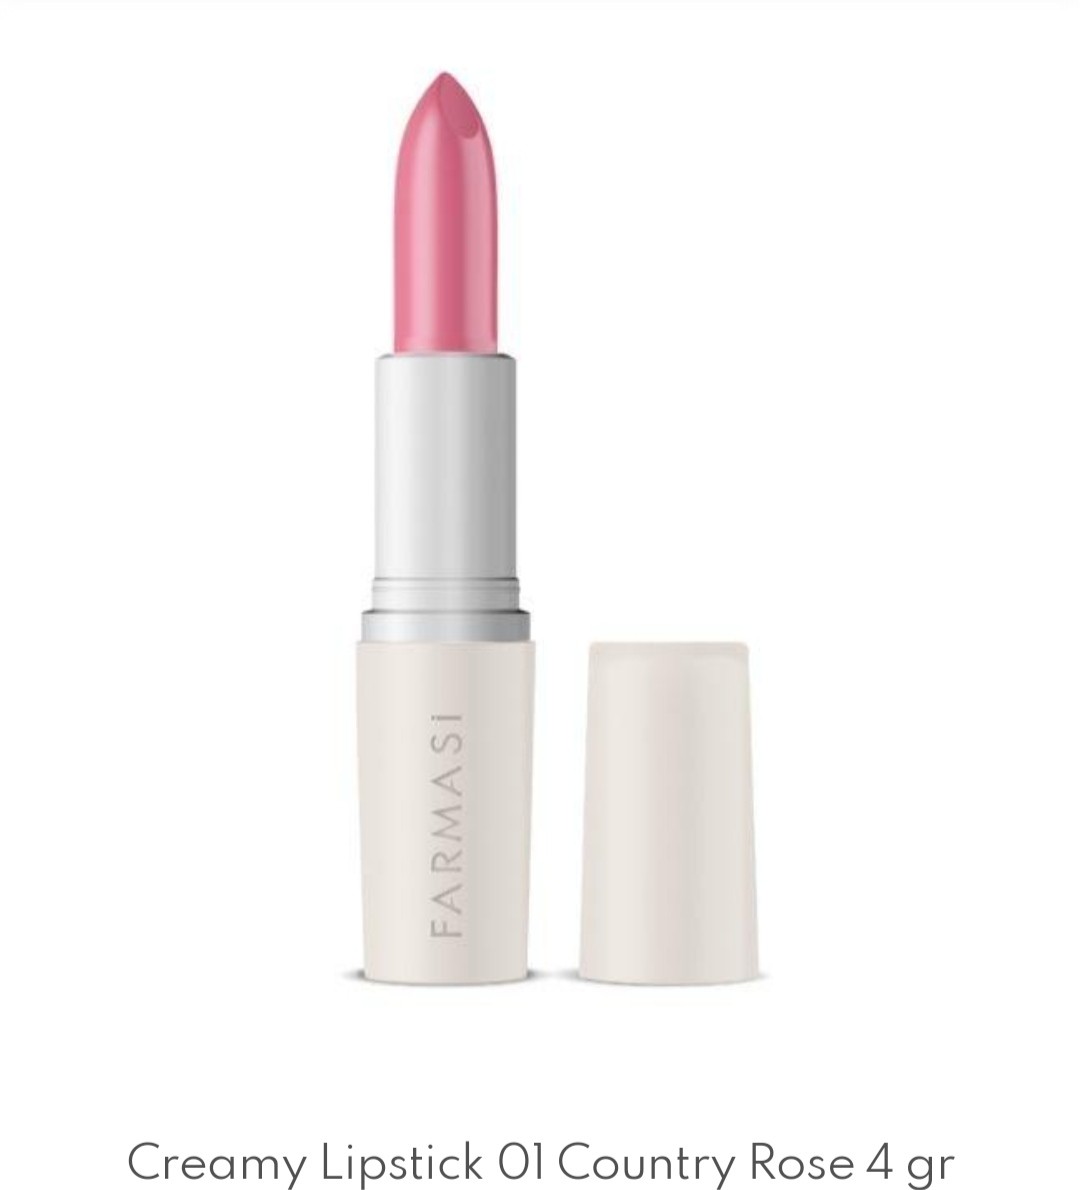 Creamy Lipstick 01 Country Rose 4 gr